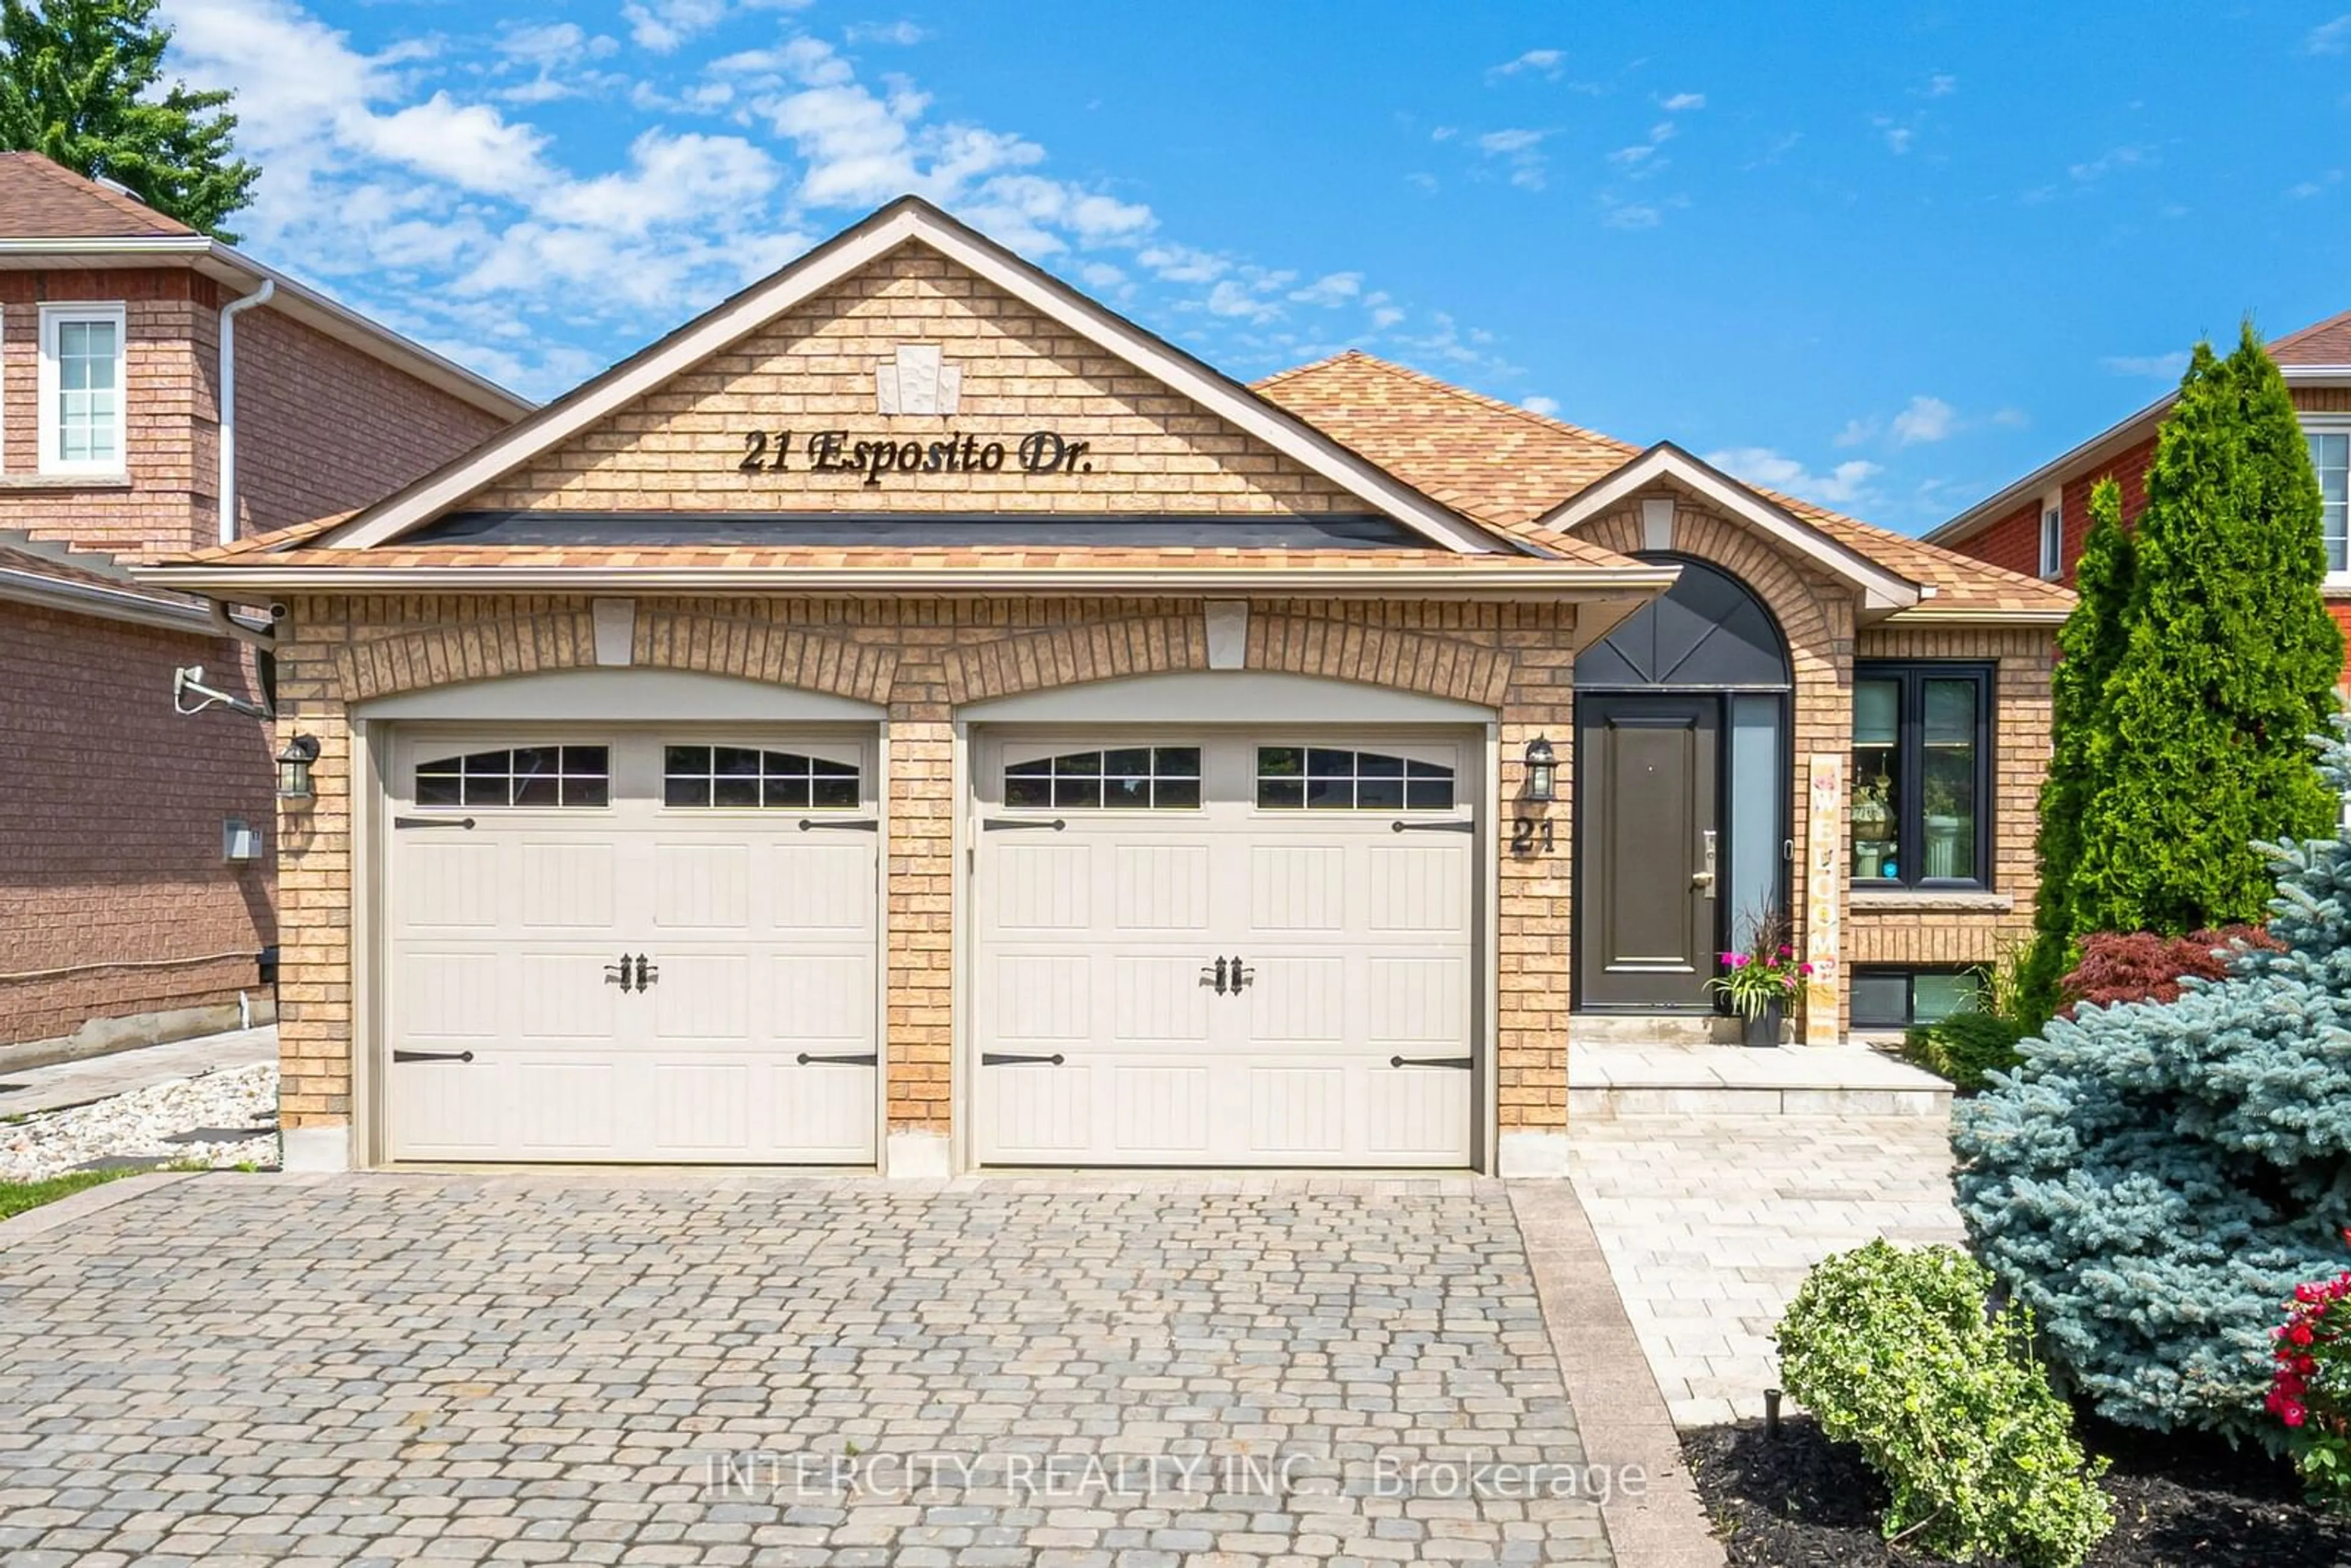 Home with brick exterior material for 21 Esposito Dr, Caledon Ontario L7E 1T3